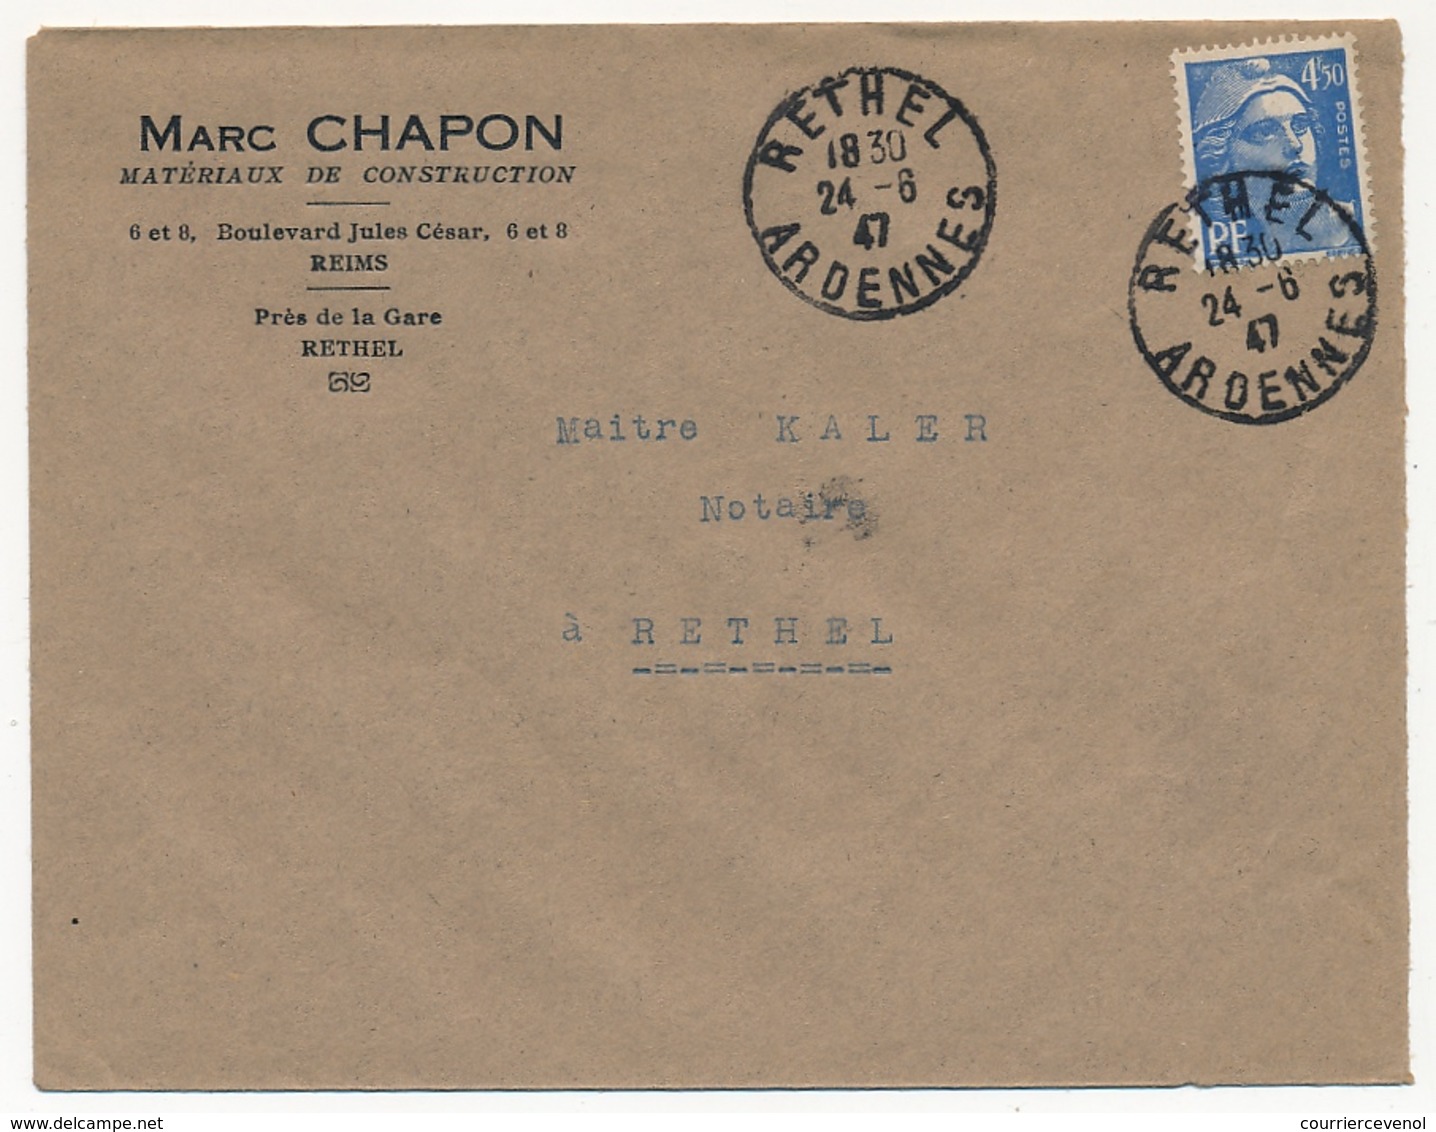 FRANCE - Env. Affr 4,50 F Gandon Seul S/l RETHEL (Ardennes) 1947 - En Tête Marc Chapon Matériaux Construction - 1945-54 Marianna Di Gandon